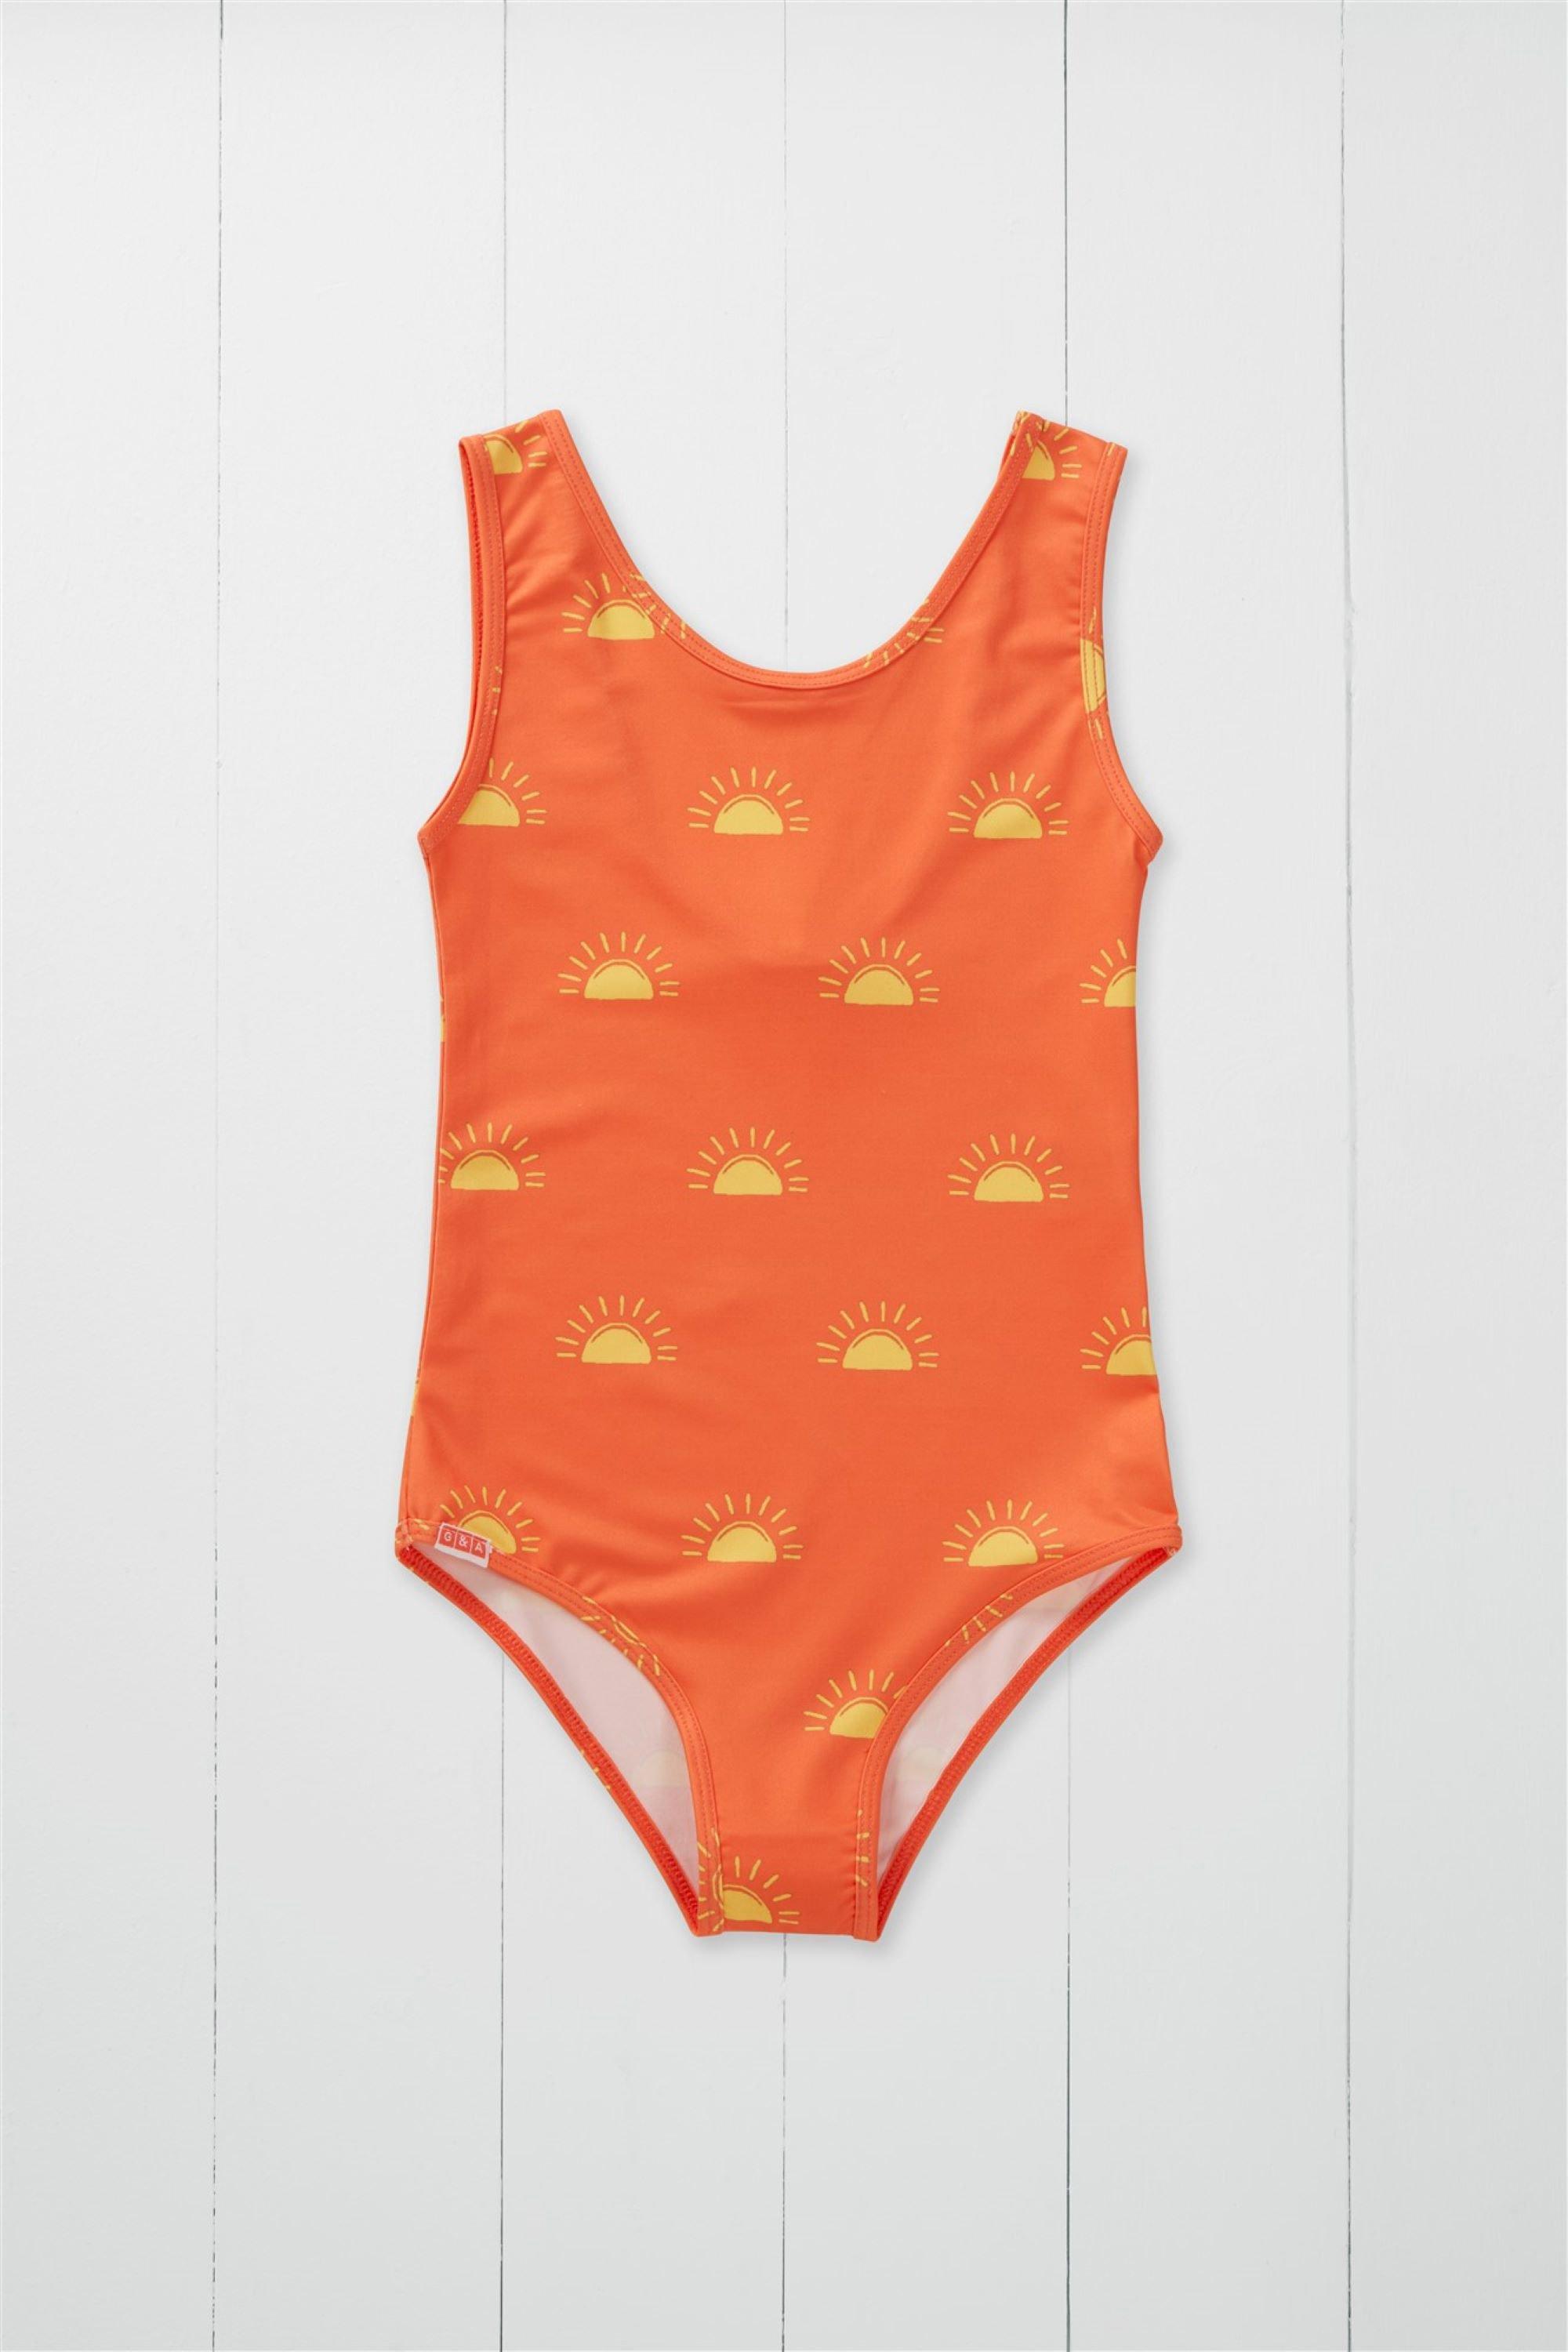 Sun Print Kids Swimsuit